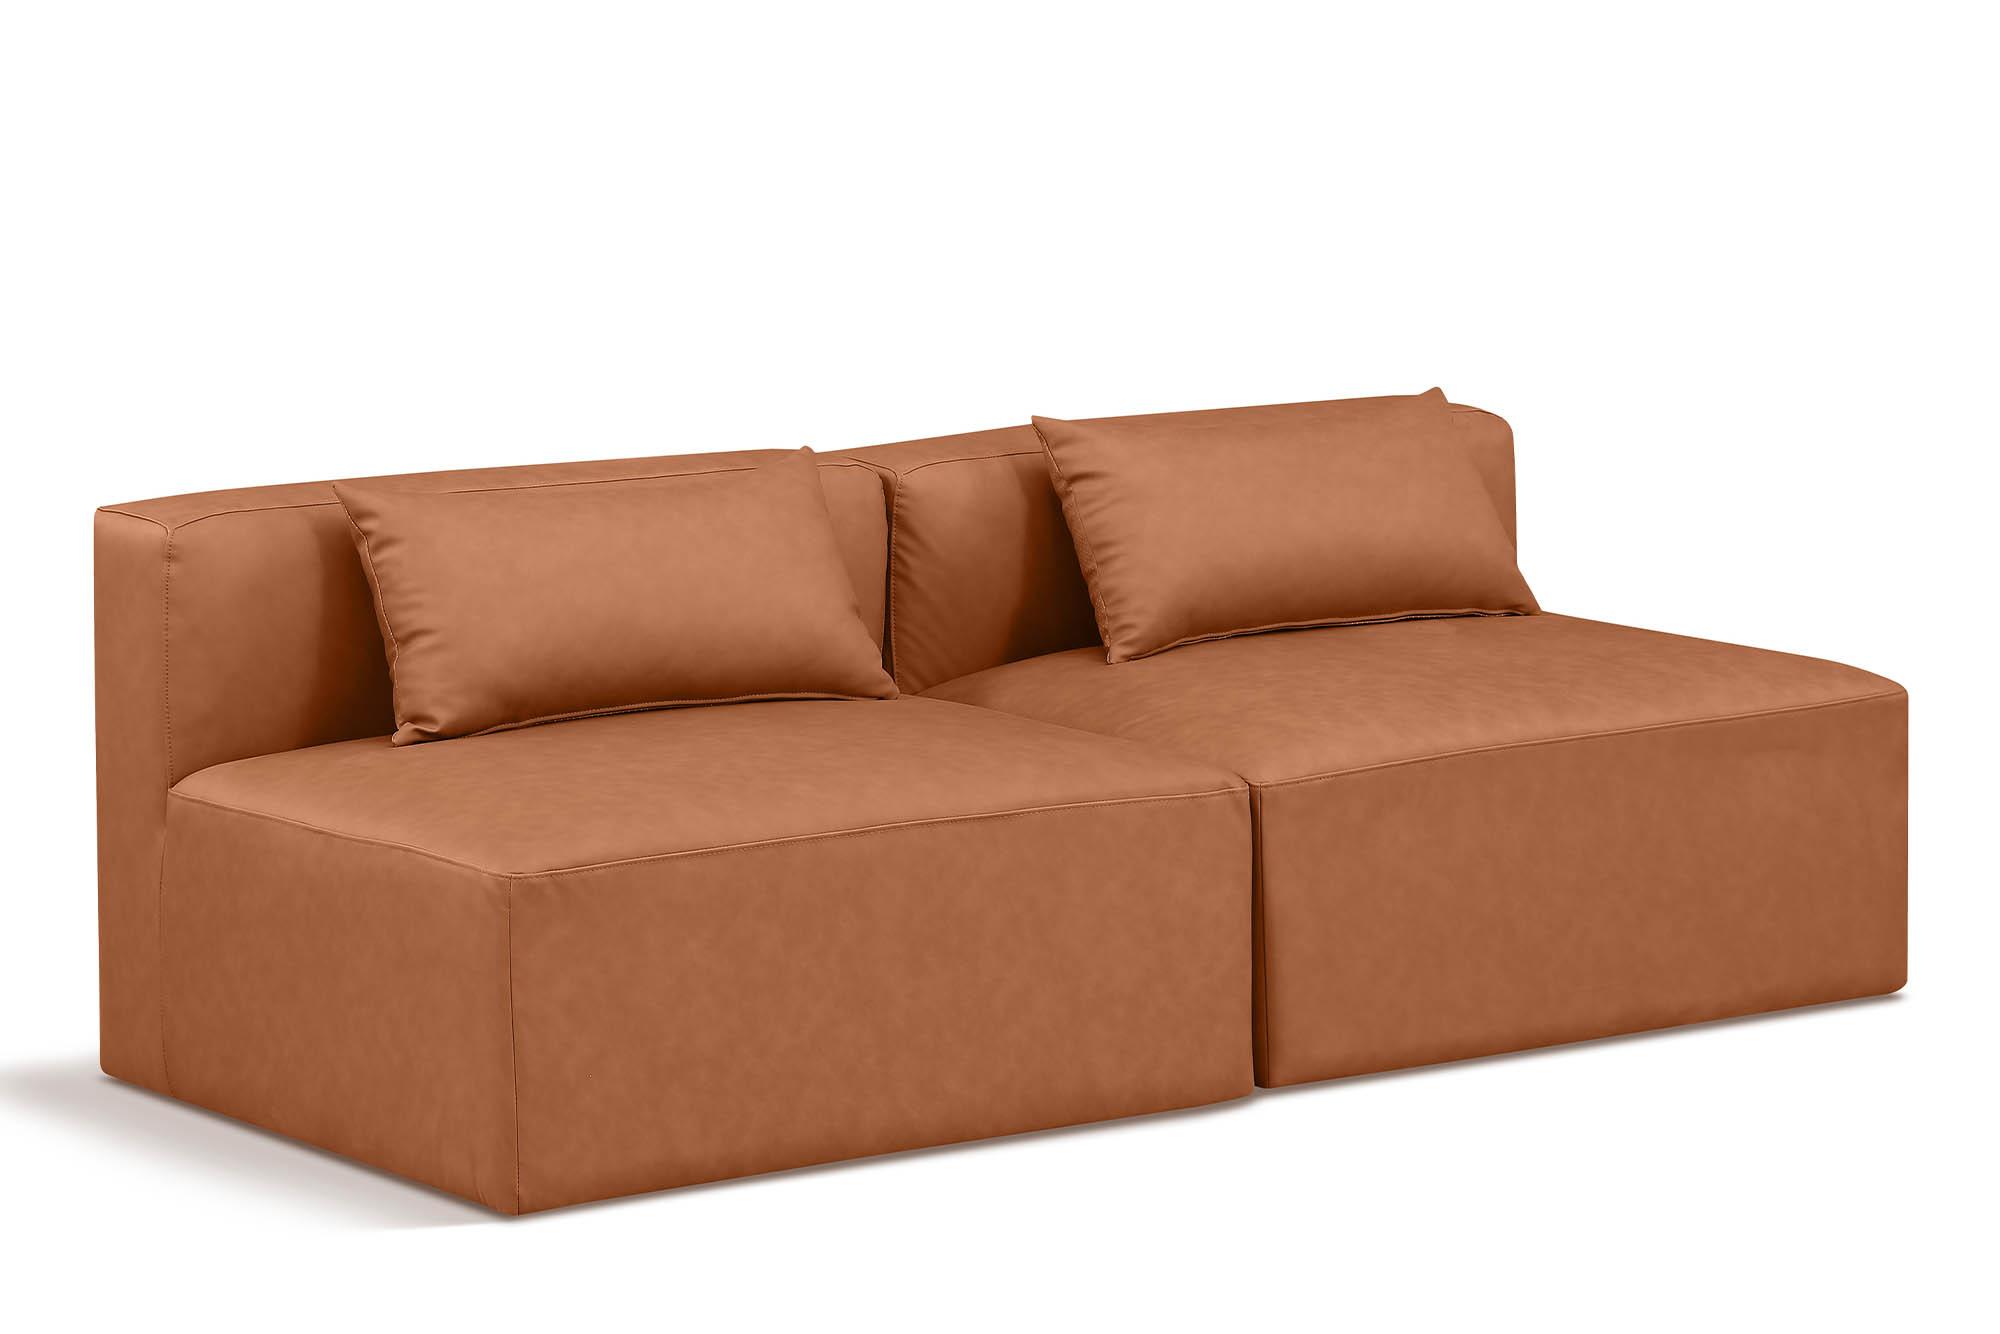 Contemporary, Modern Modular Sofa CUBE 668Cognac-S72A 668Cognac-S72A in Cognac Faux Leather